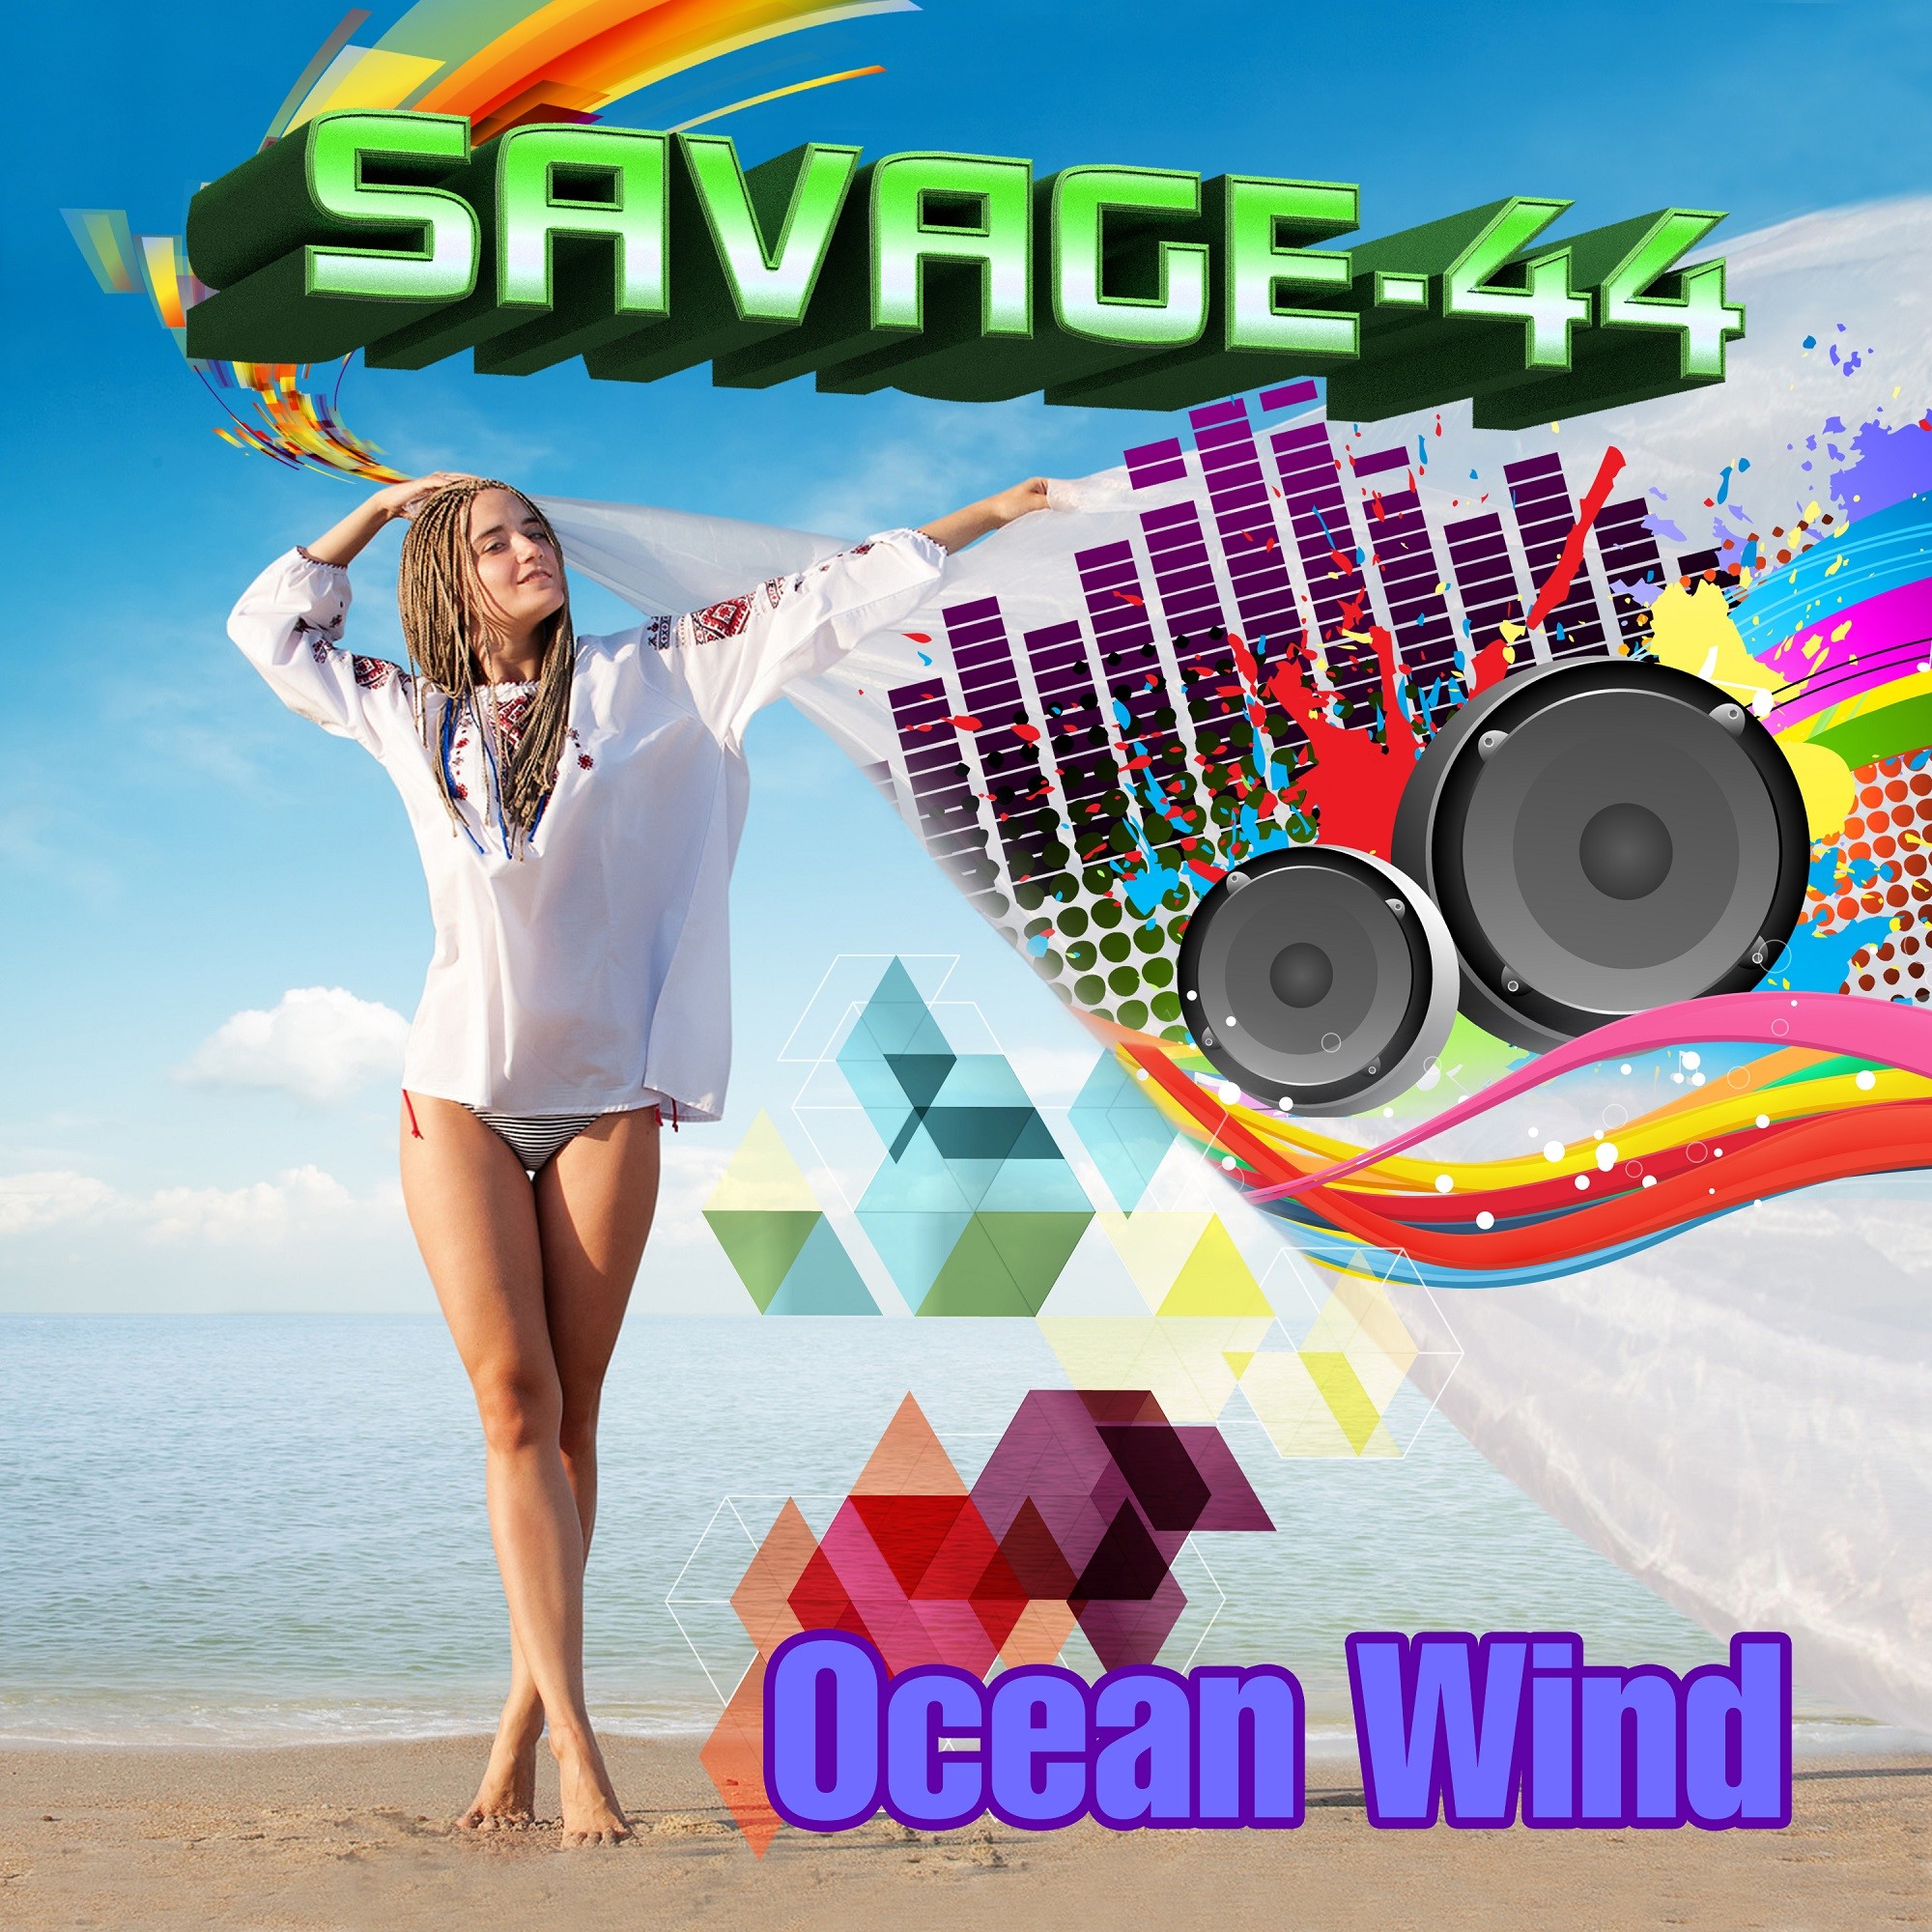 Savage 44 club drive new. Savage 44. Savage-44 - City Light New Eurodance Hit 2024. Savage-44 - Ocean Wind (Top Deep House Hit). Savage-44 - City Light.